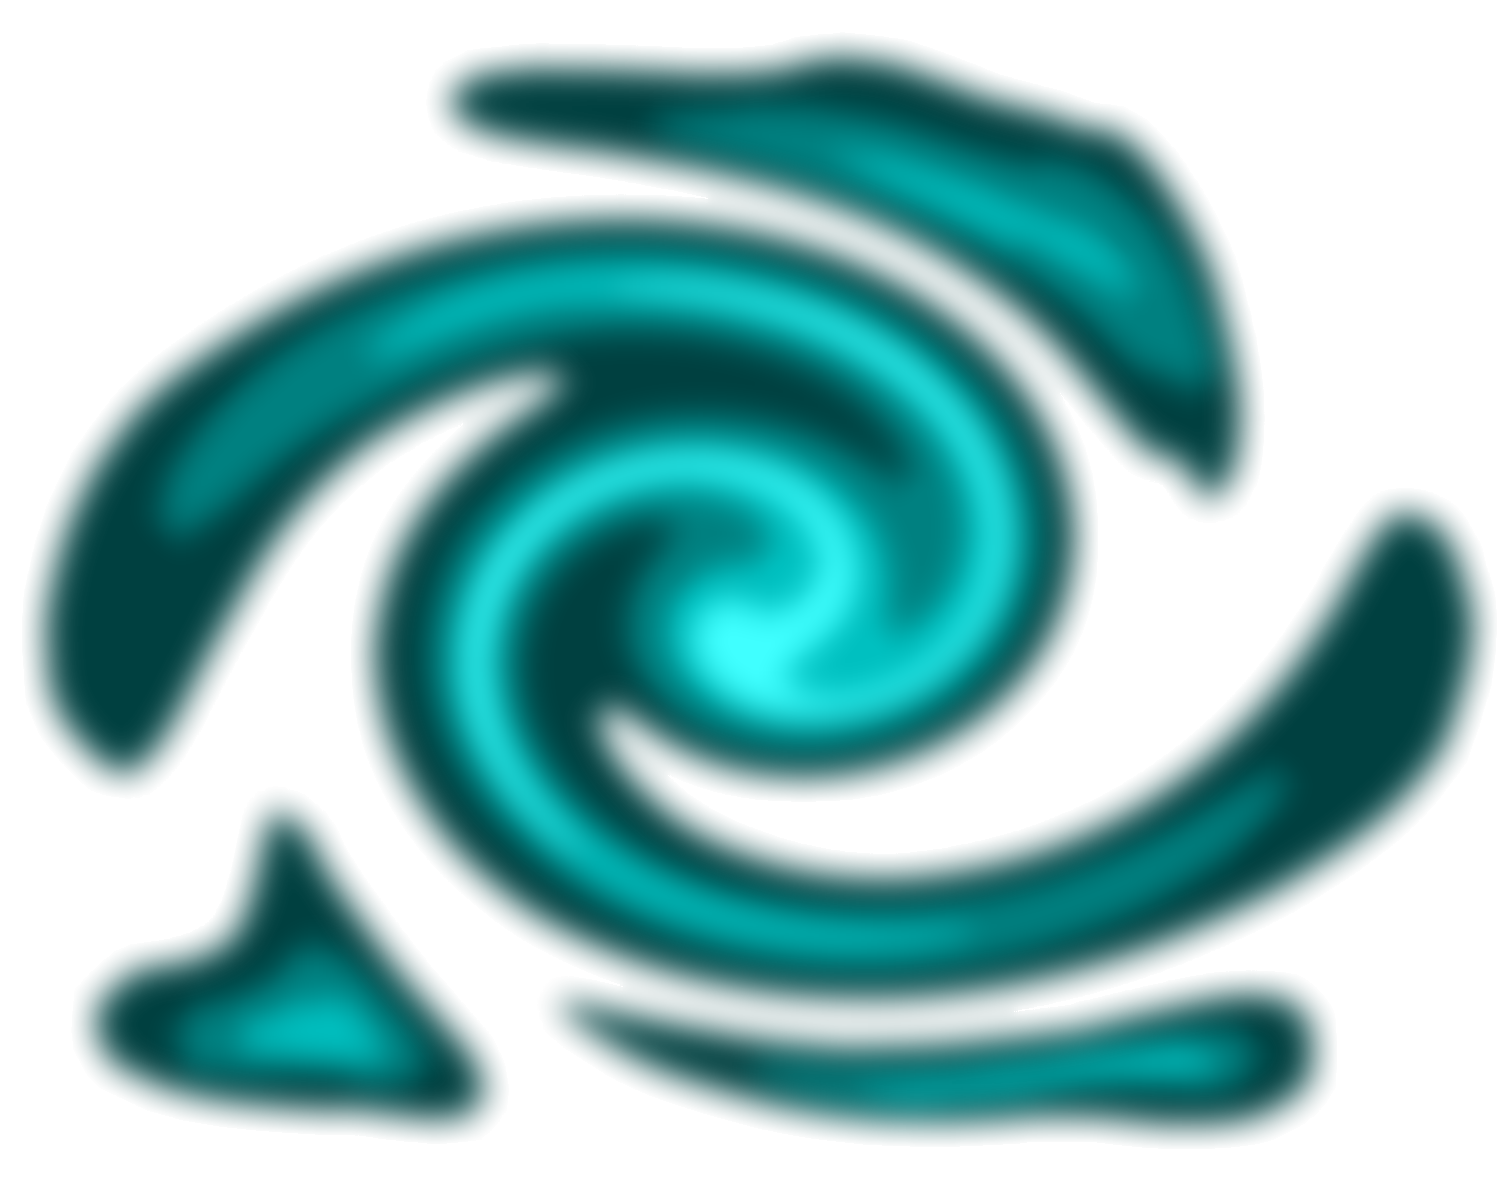 A blue galaxy background that spirals